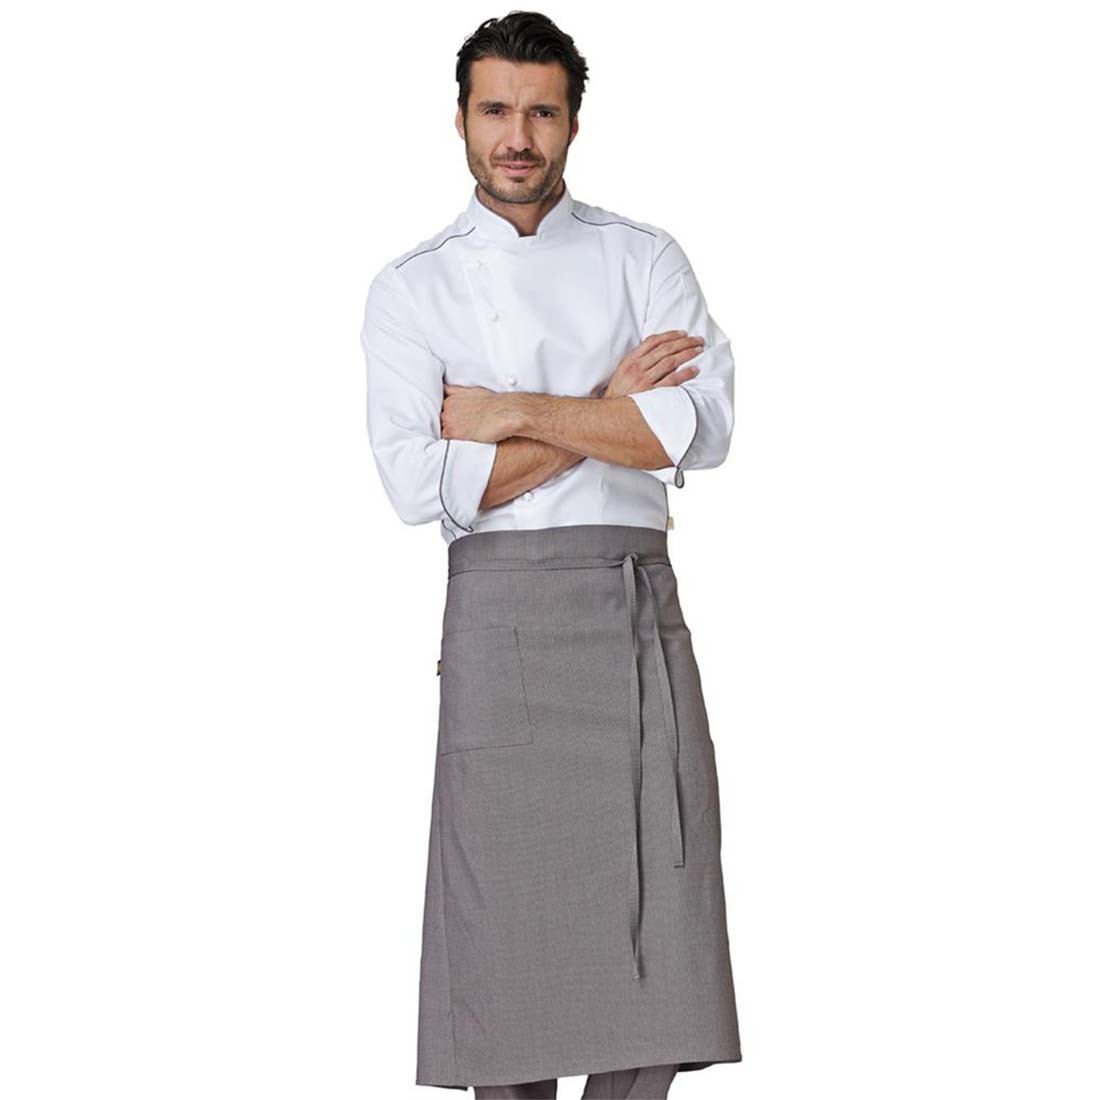 TRENTO I Chef's Apron - Safetywear